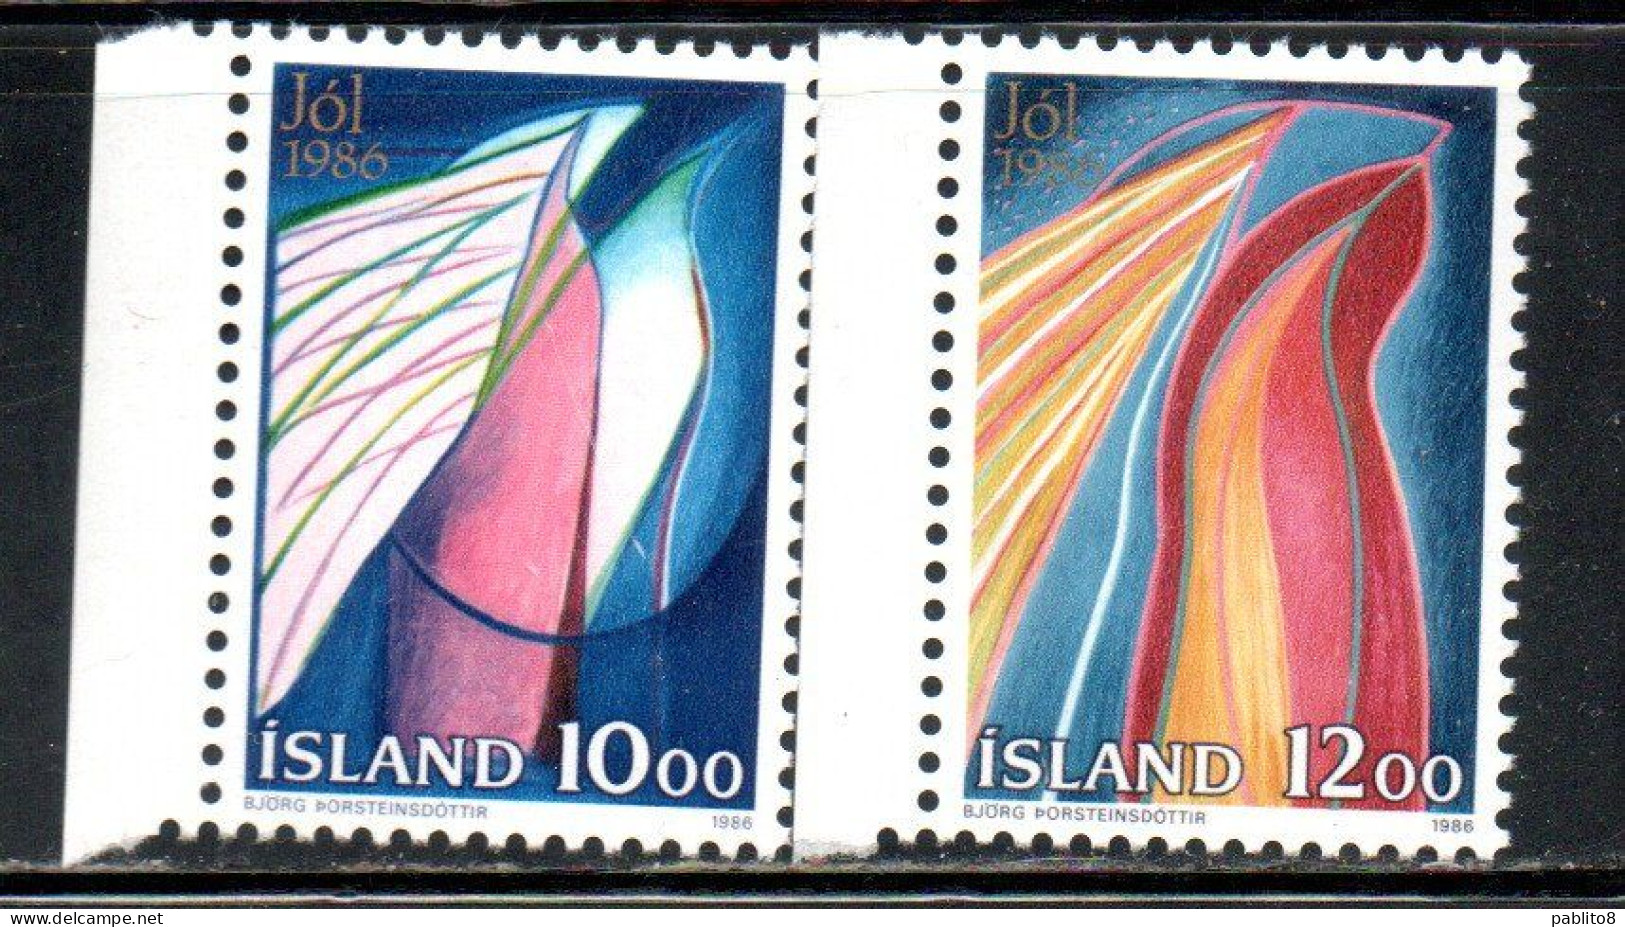 ISLANDA ICELAND ISLANDE ISLAND 1986 CHRISTMAS NATALE NOEL WEIHNACHTEN NAVIDAD JOL COMPLETE SET SERIE COMPLETA MNH - Nuevos